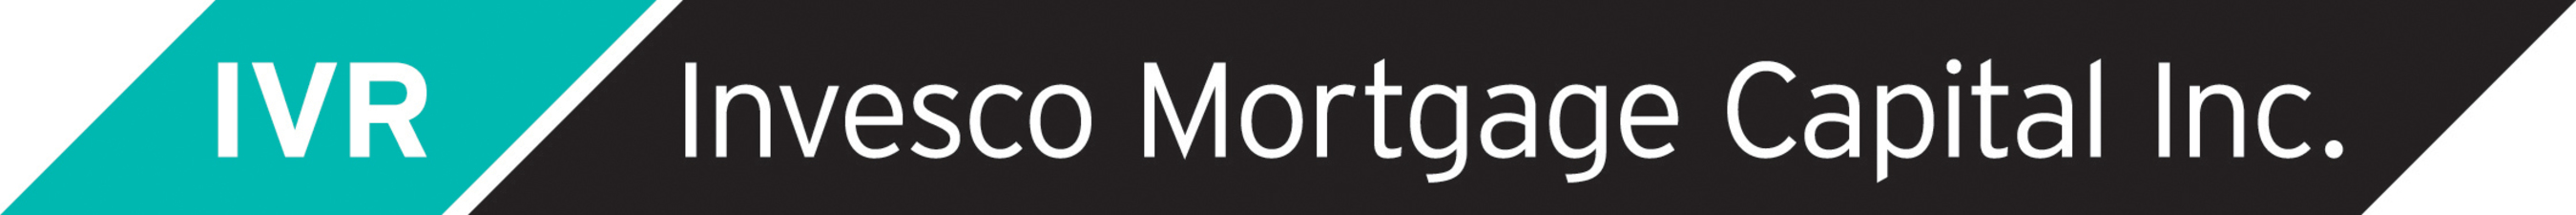 Invesco Mortgage Capital Inc. Logo